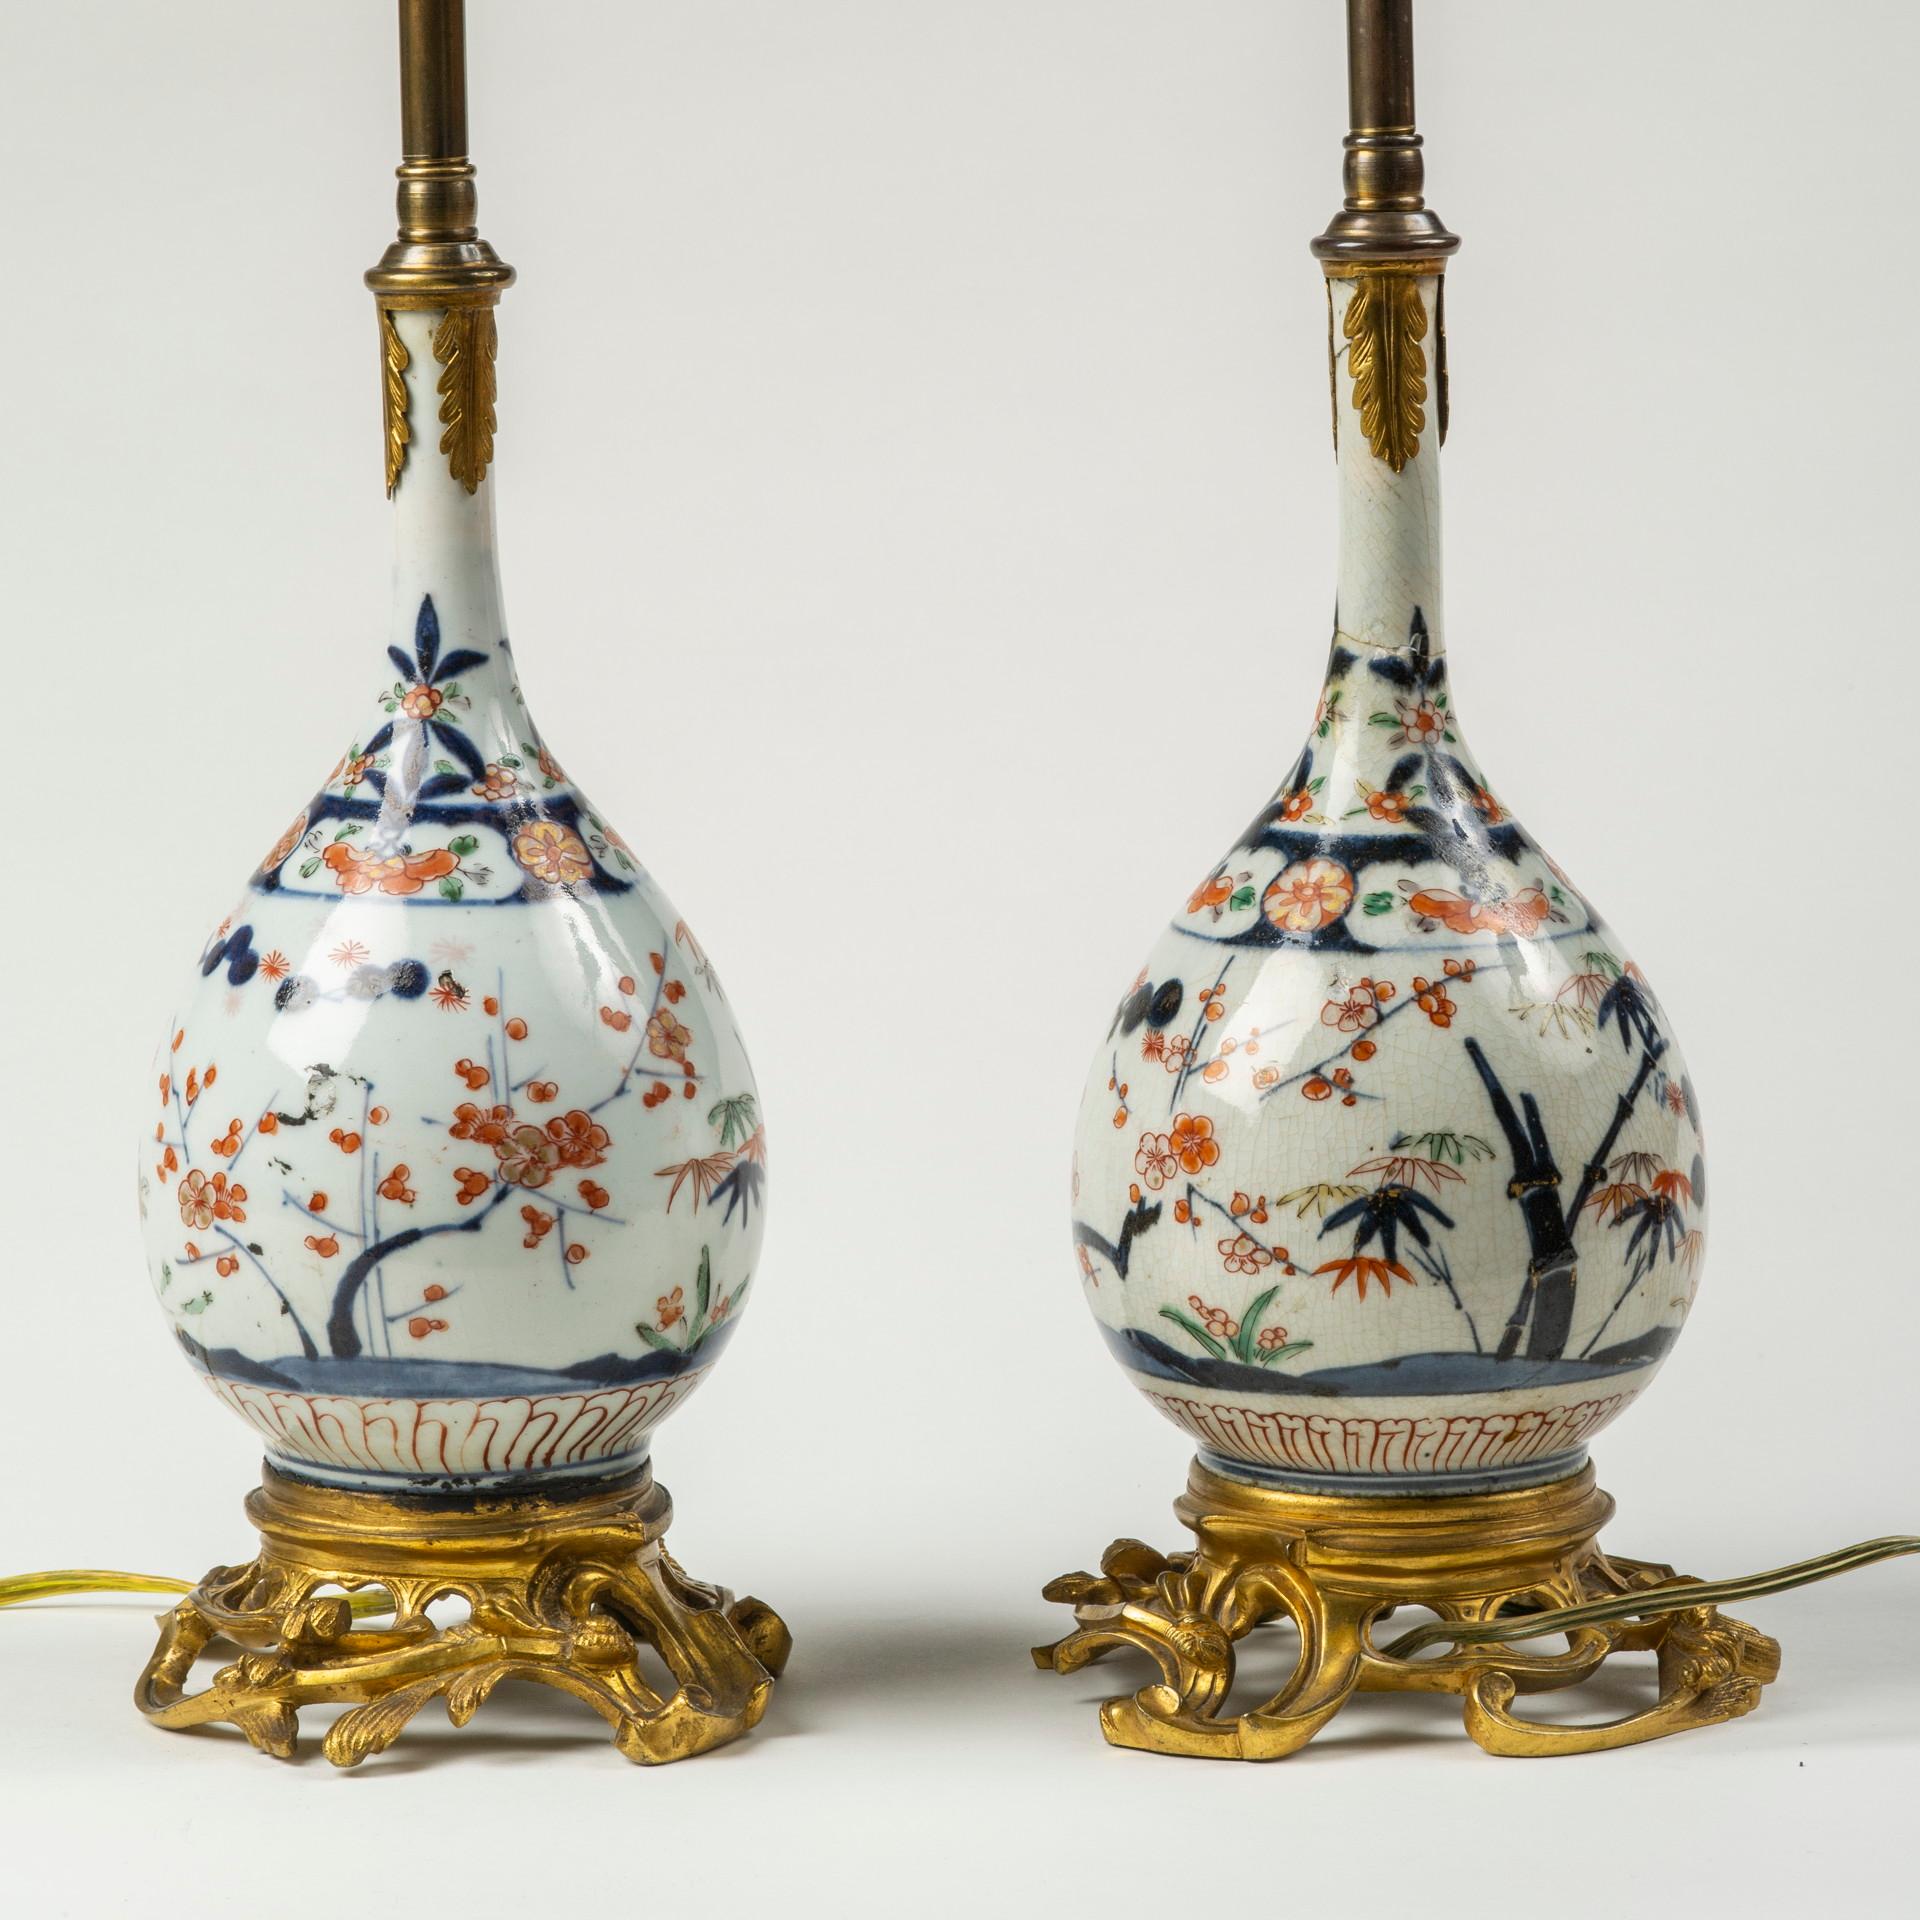 18th Century Pair of Japanese Ormolu Mounted Imari Vases Mounted as Lamps